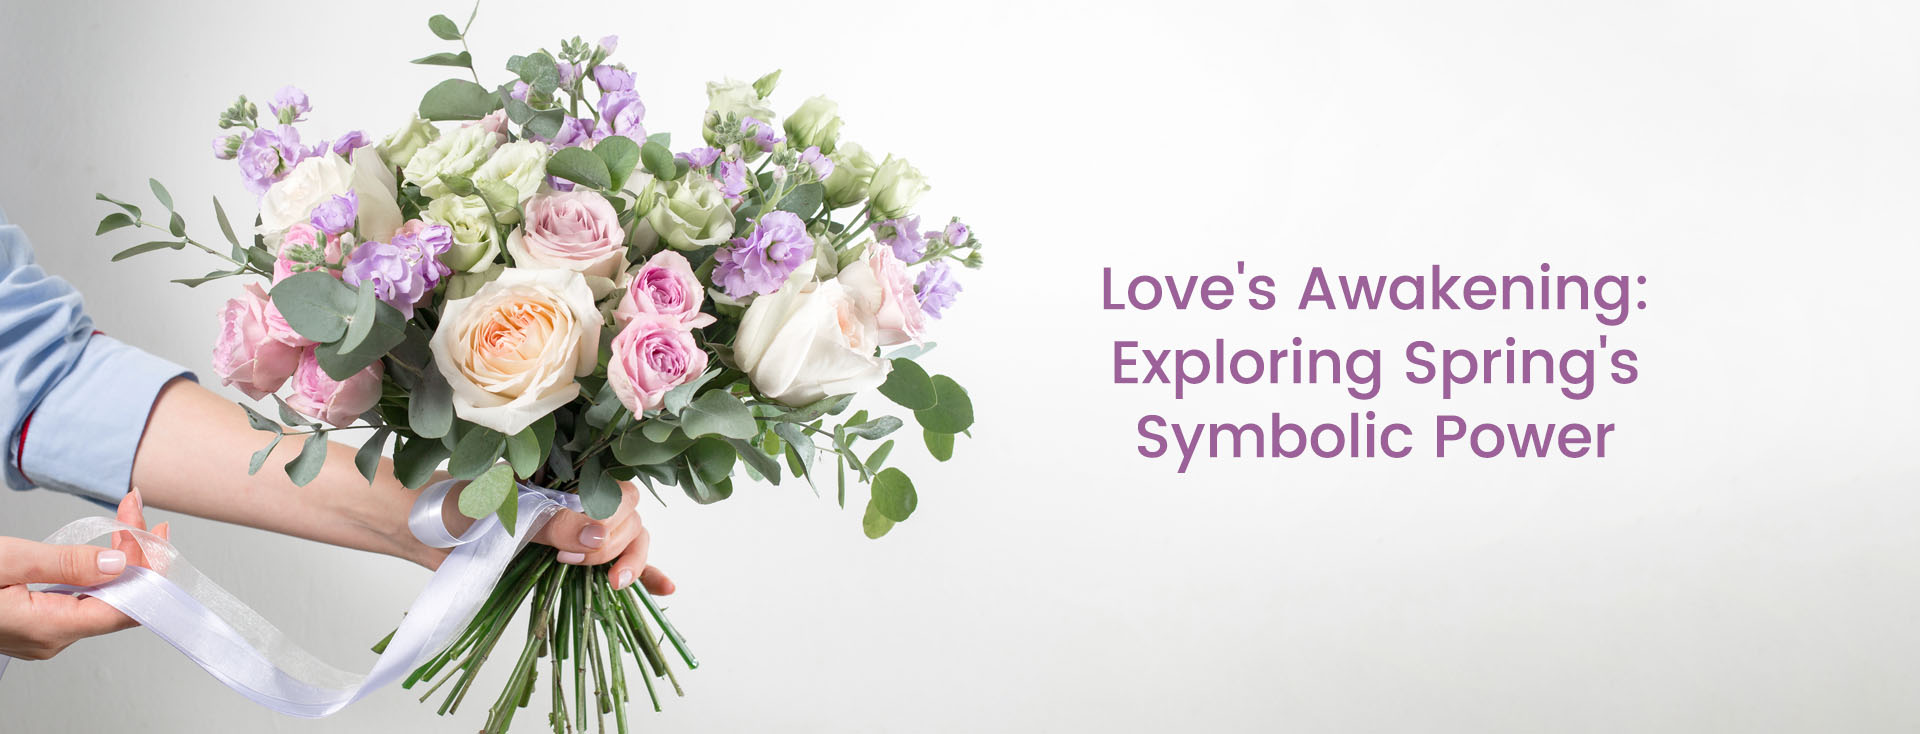 Love's Awakening: Exploring Spring's Symbolic Power